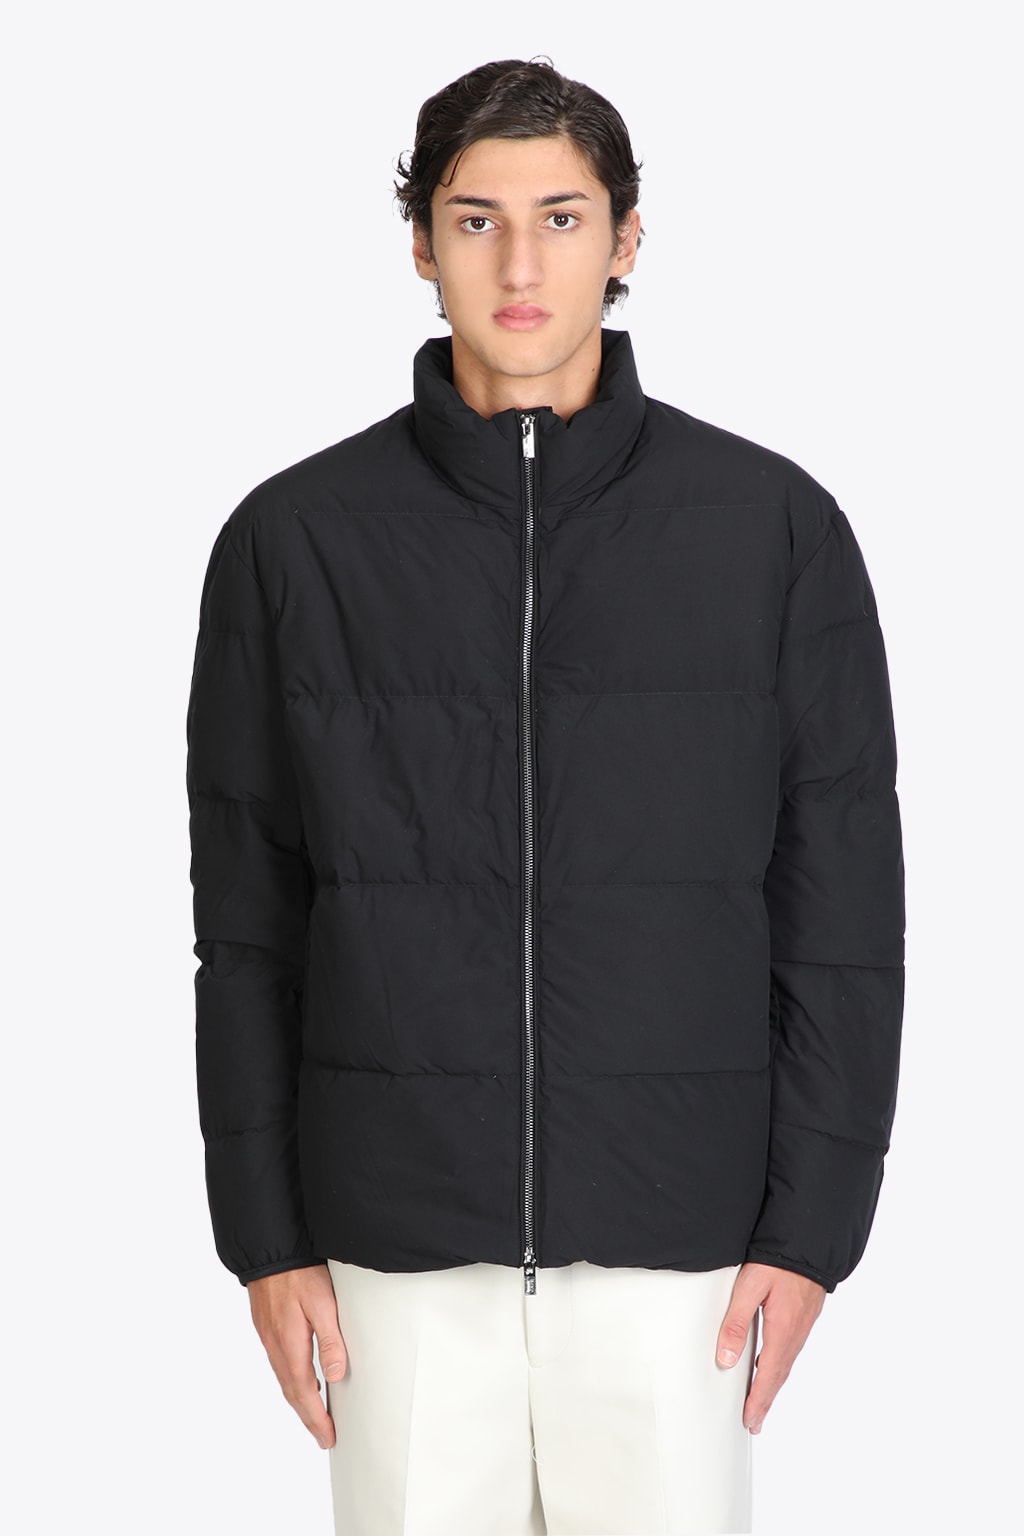 Emporio Armani Down Jacket Black stretch nylon puffer jacket.